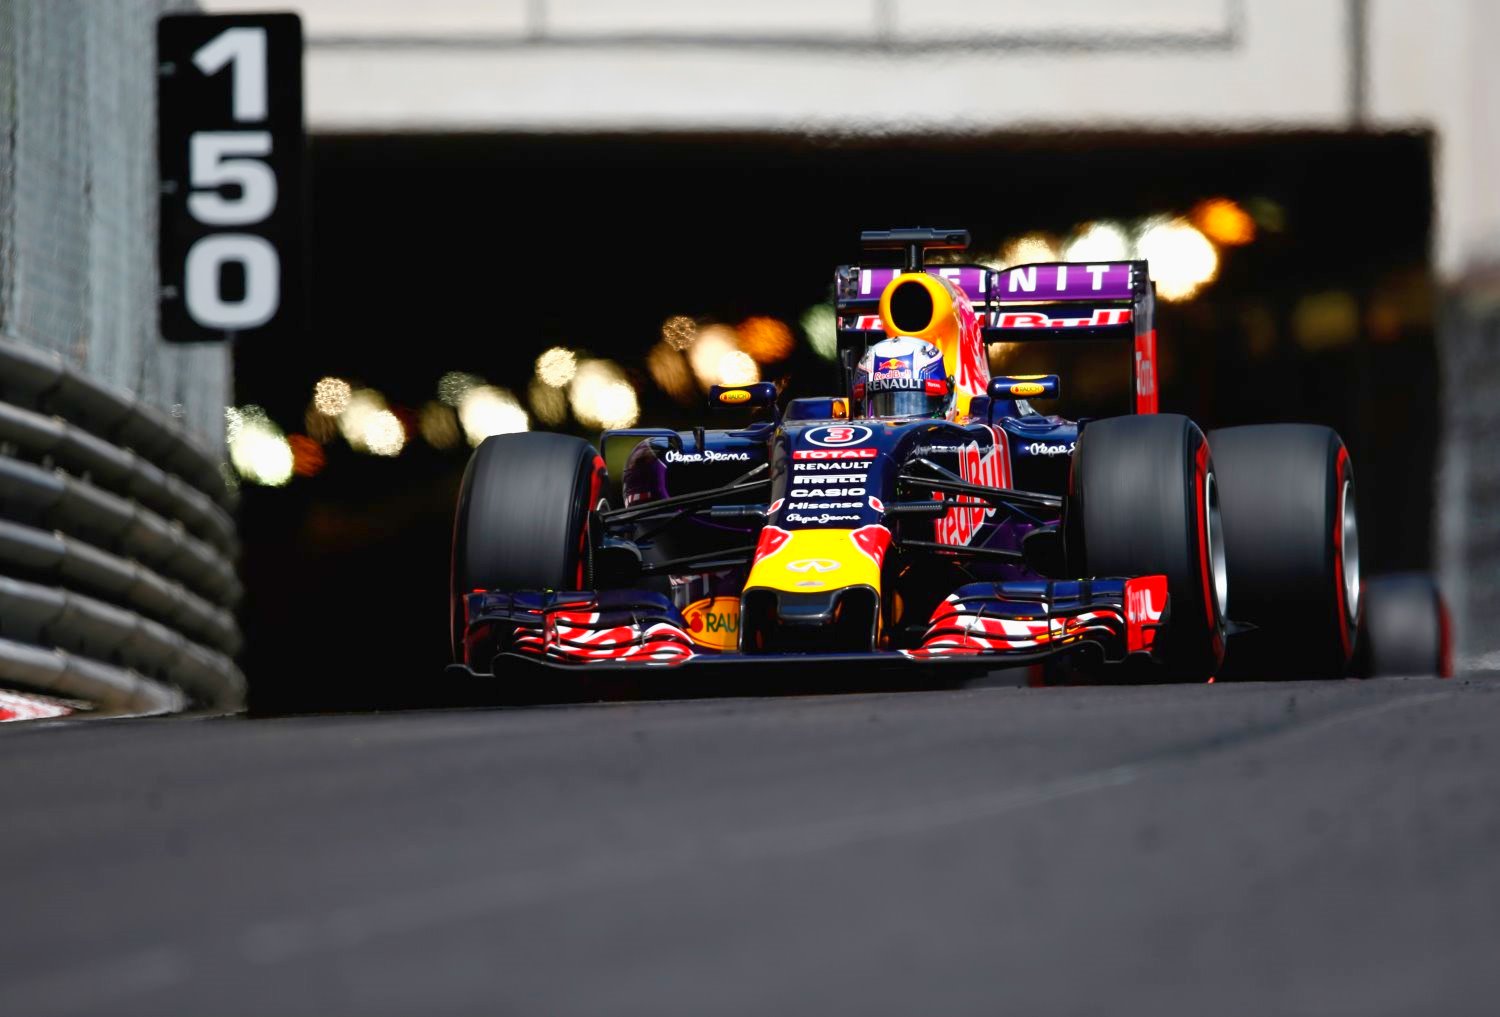 Ricciardo to get new chassis